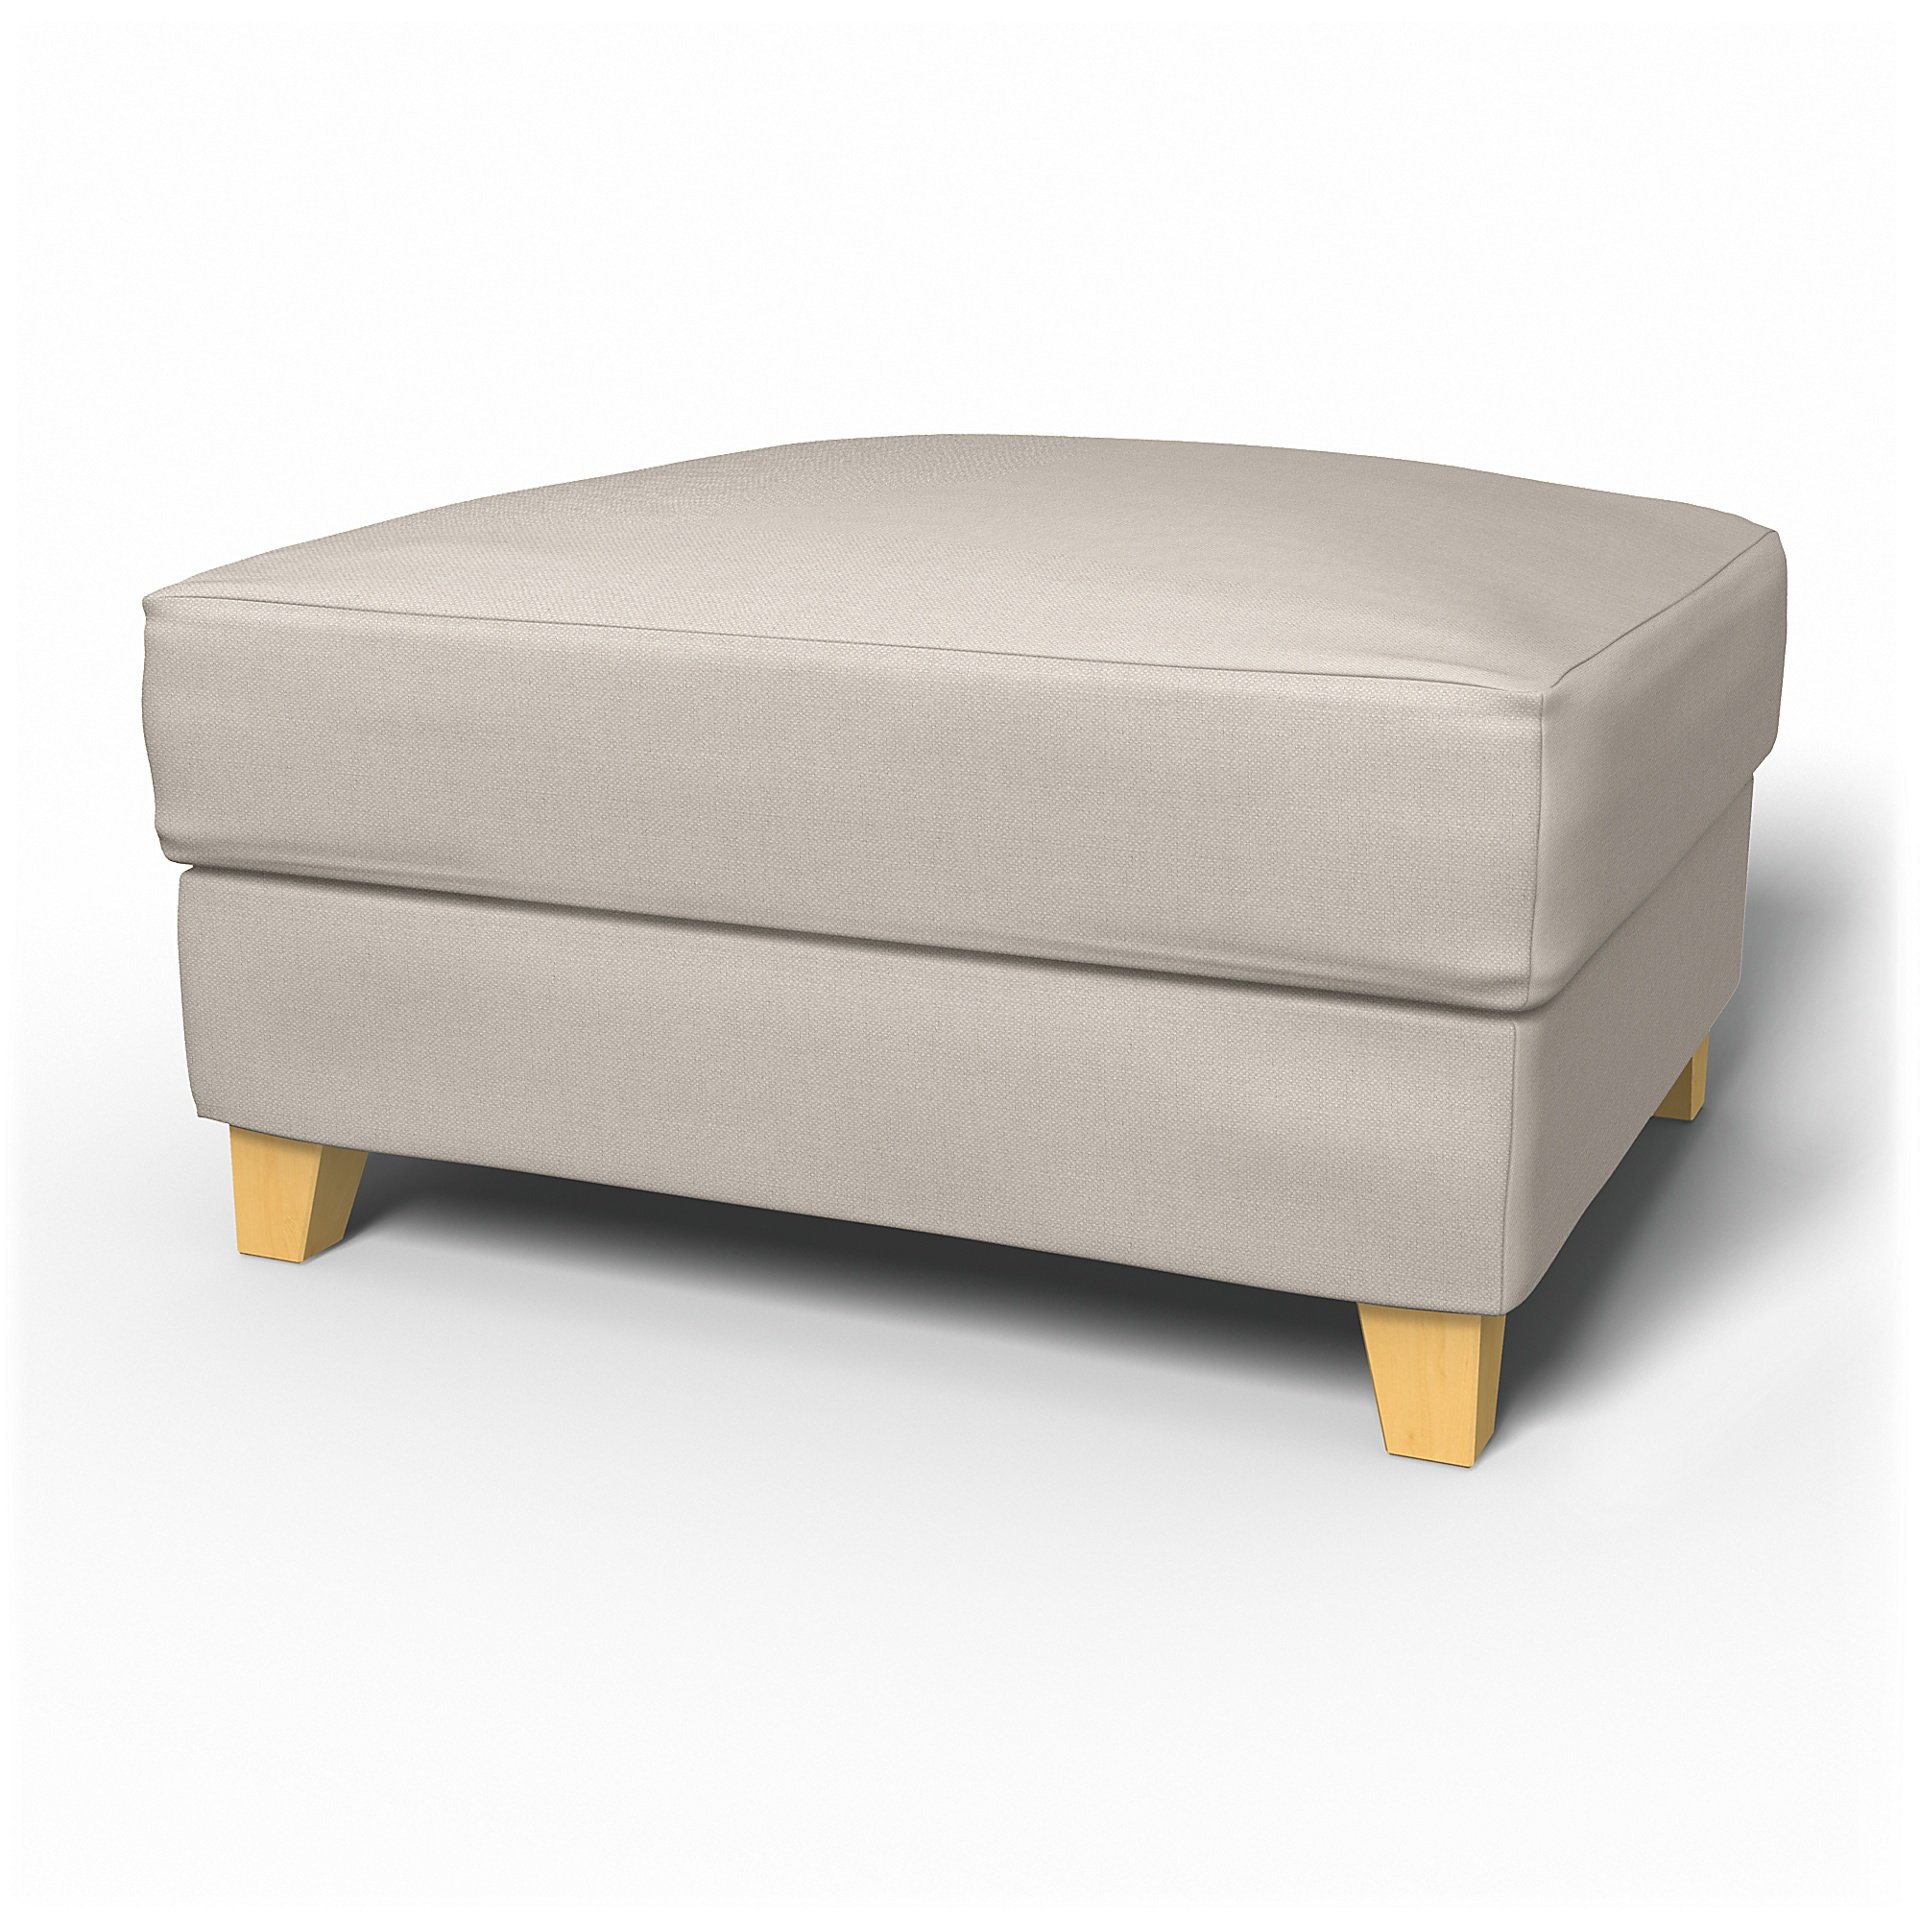 IKEA - Backa Footstool Cover, Chalk, Linen - Bemz